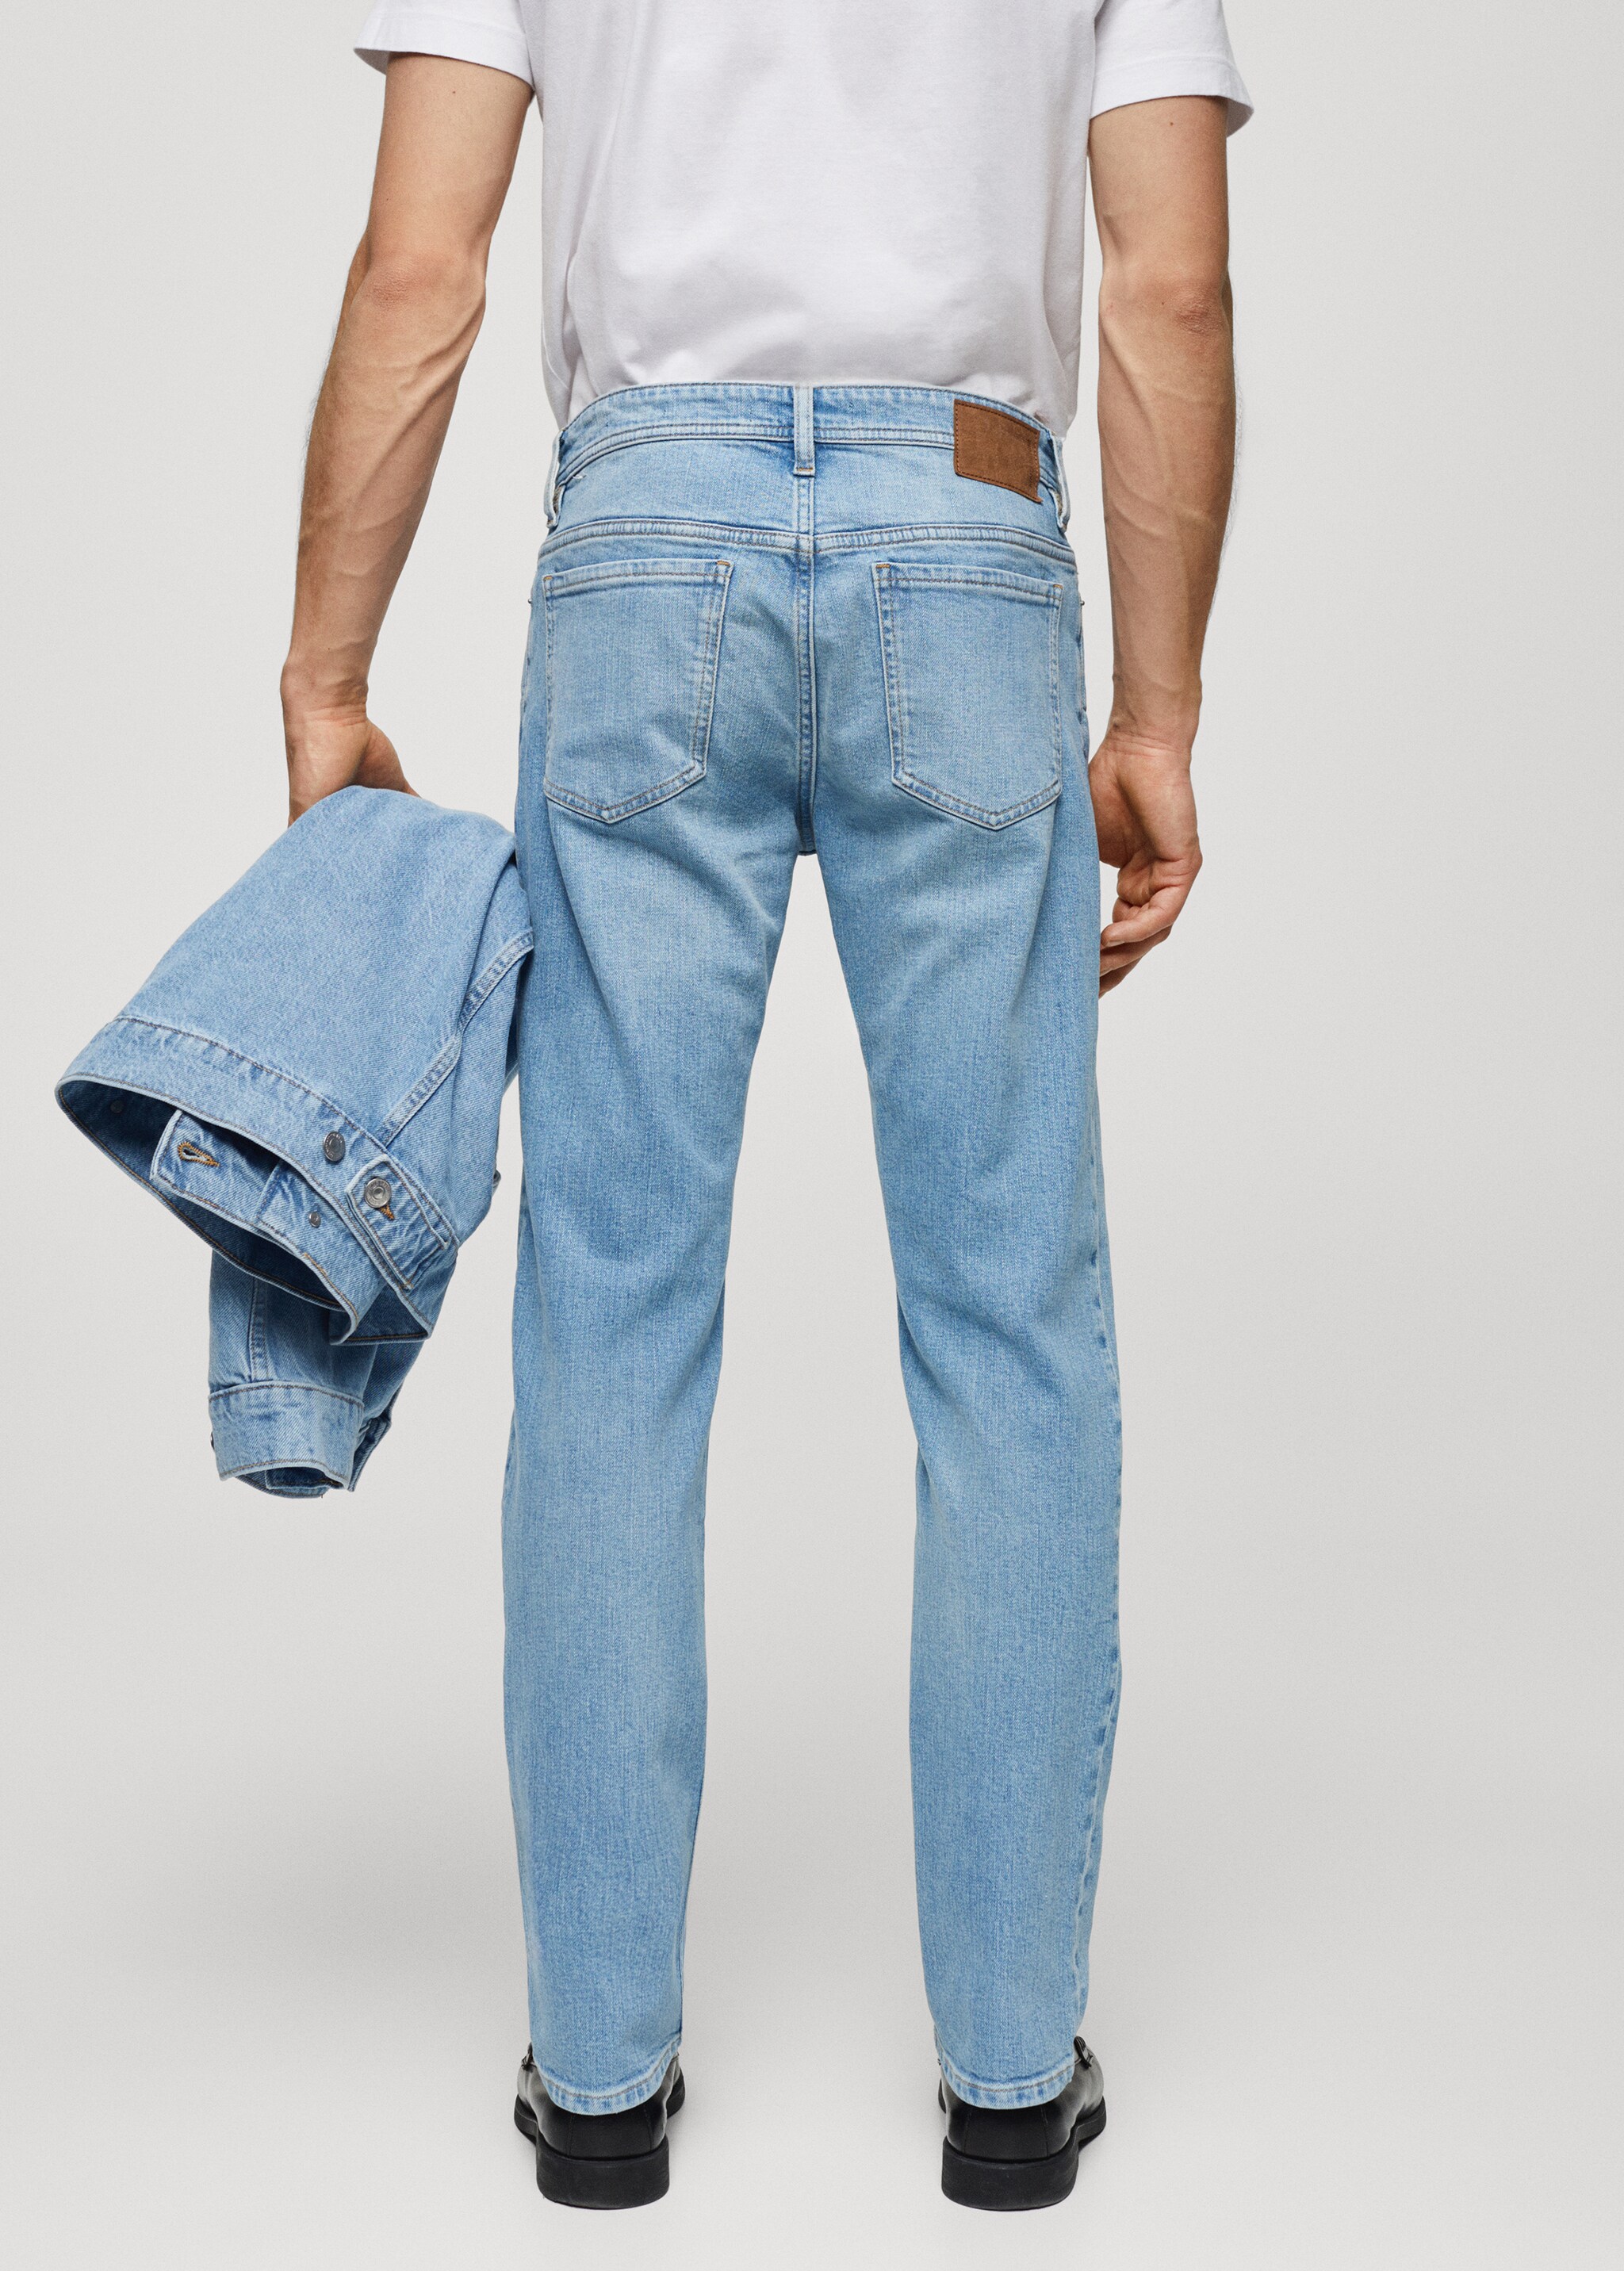 Jeans Jan slim fit  - Reverso del artículo